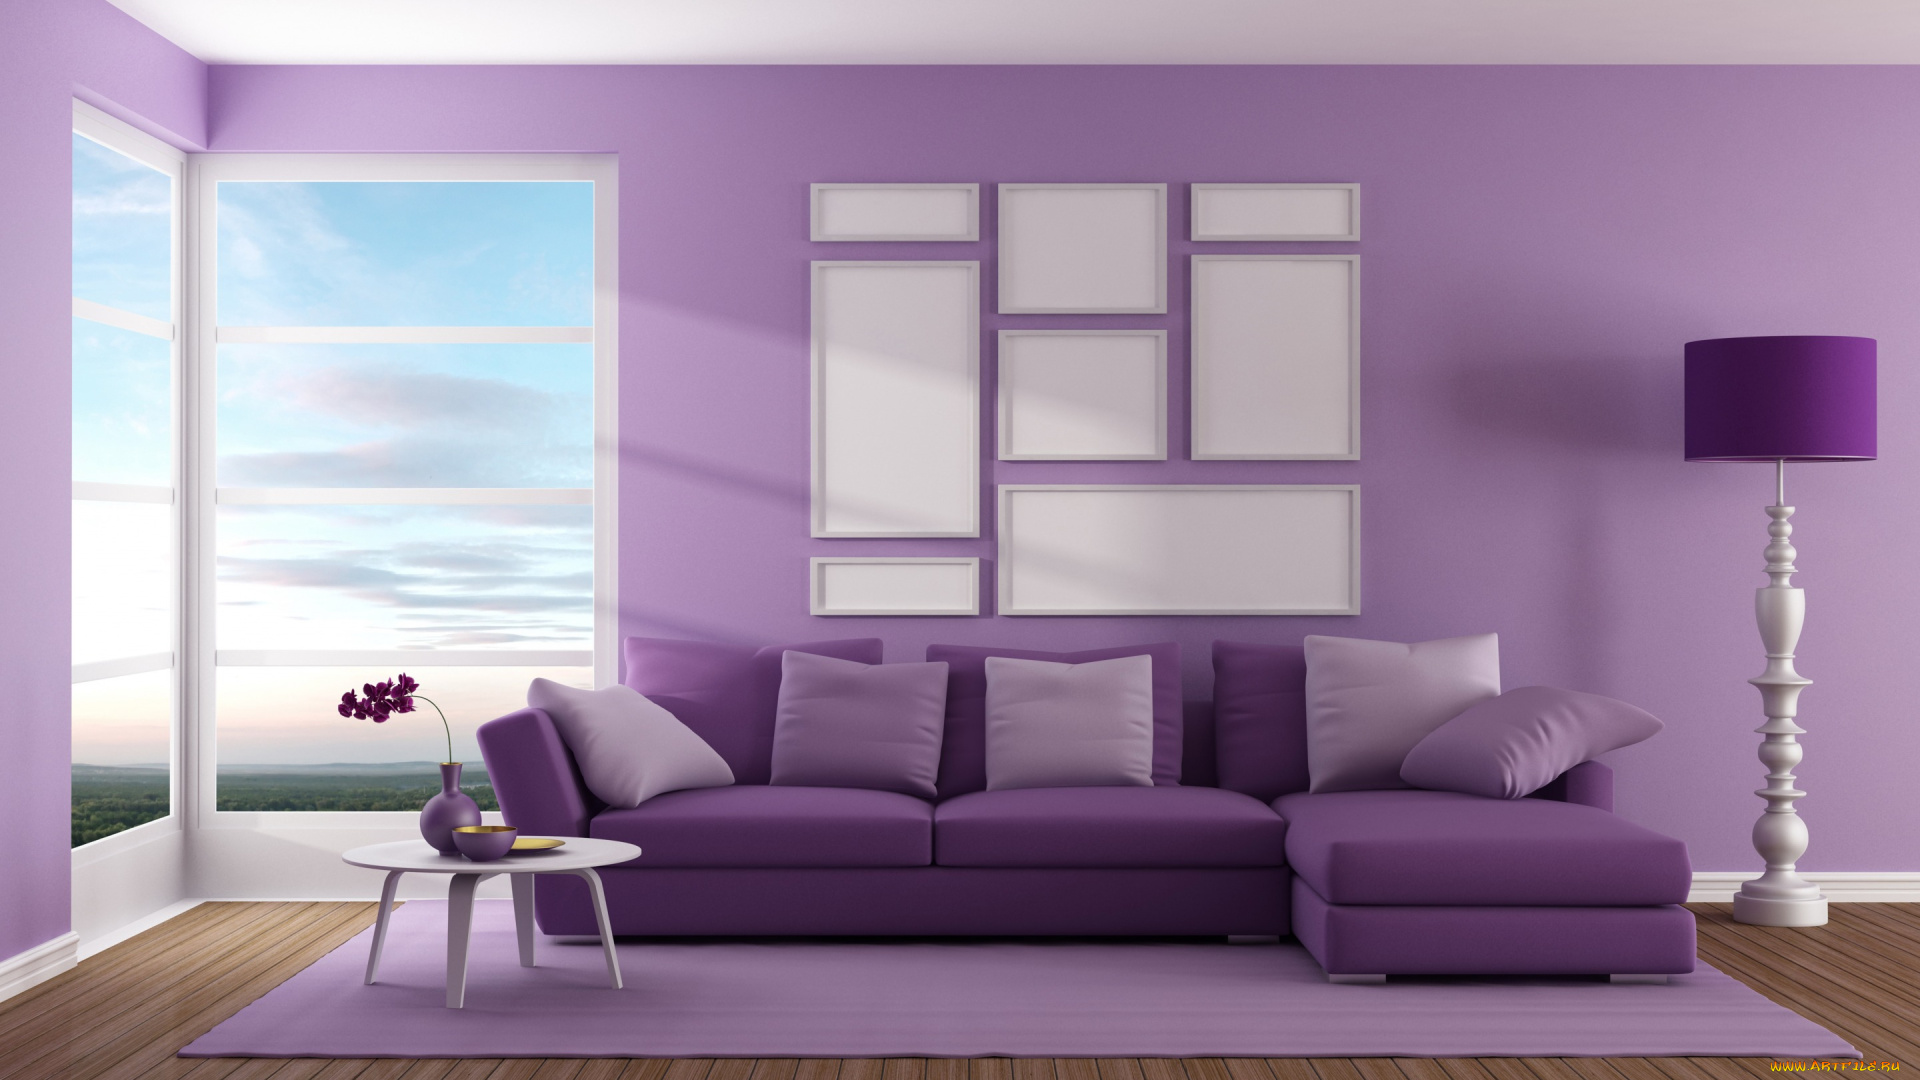 3д, графика, реализм, , realism, purple, гостиная, окно, интерьер, диван, дизайн